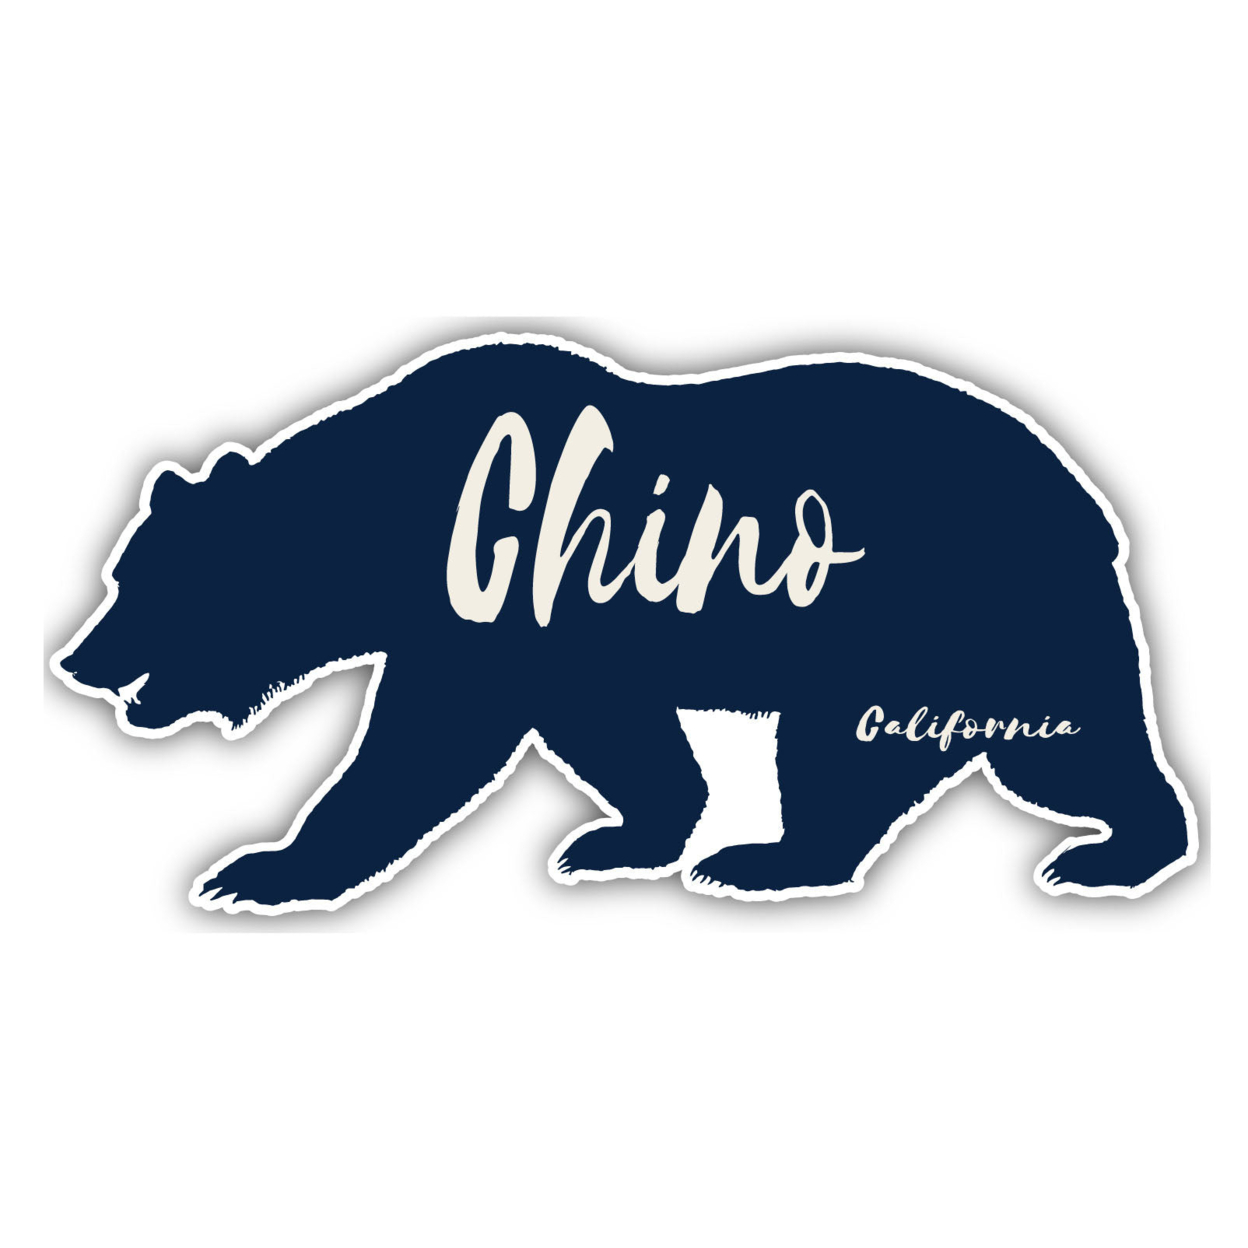 Chino California Souvenir Decorative Stickers (Choose Theme And Size) - Single Unit, 8-Inch, Bear